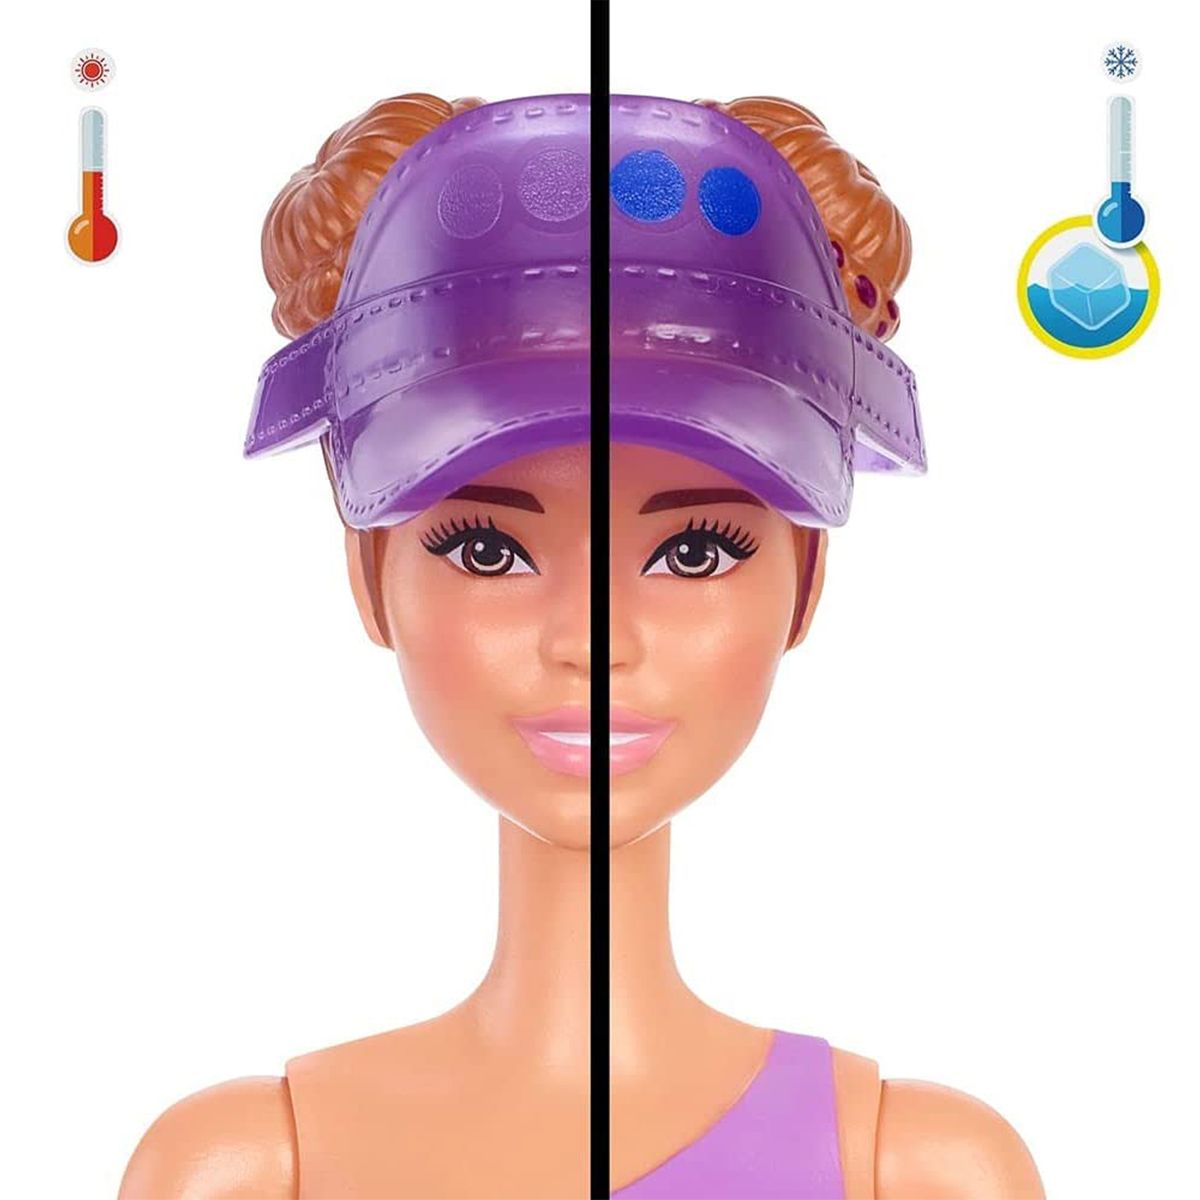 Barbie Color Reveal Mattel GTR95 Sand&Sonne Serie Puppe mit 7 Überraschungen